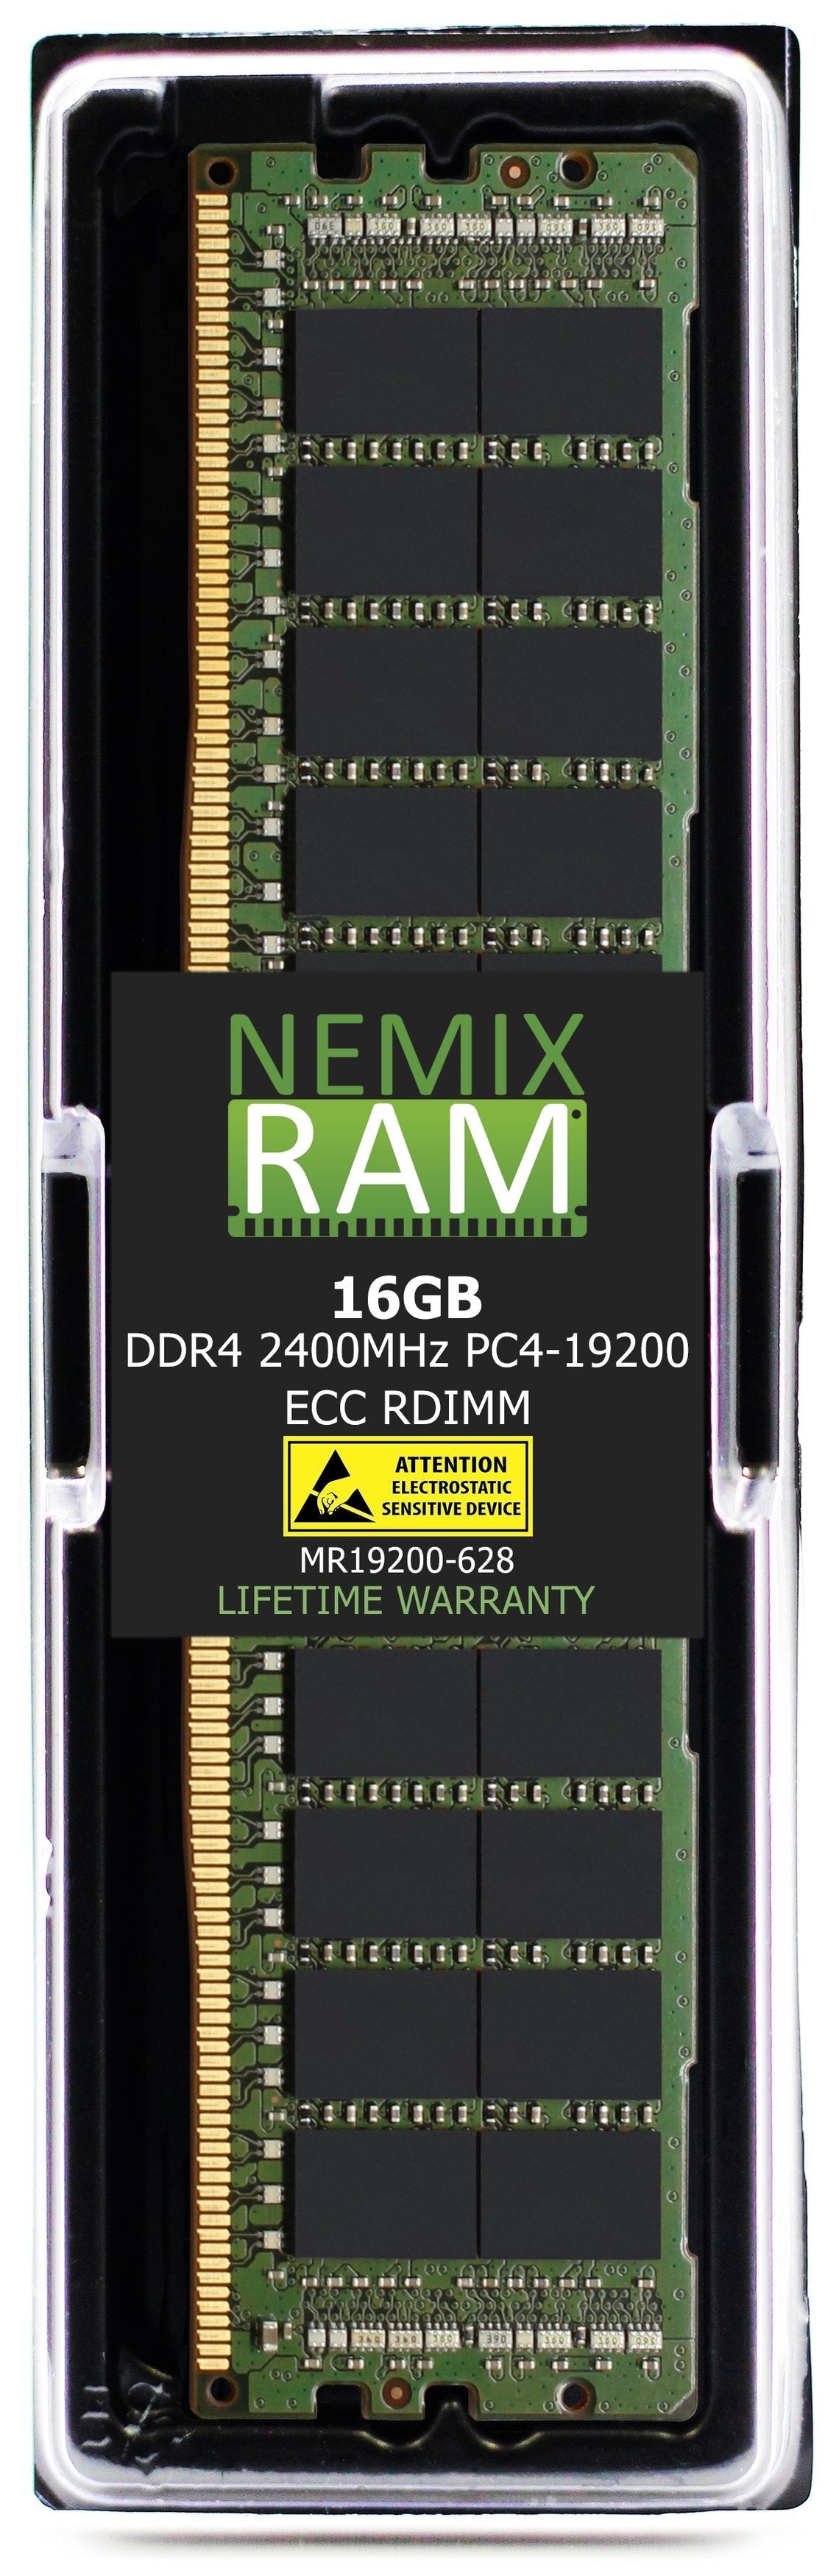 DDR4 2400MHZ PC4-19200 RDIMM